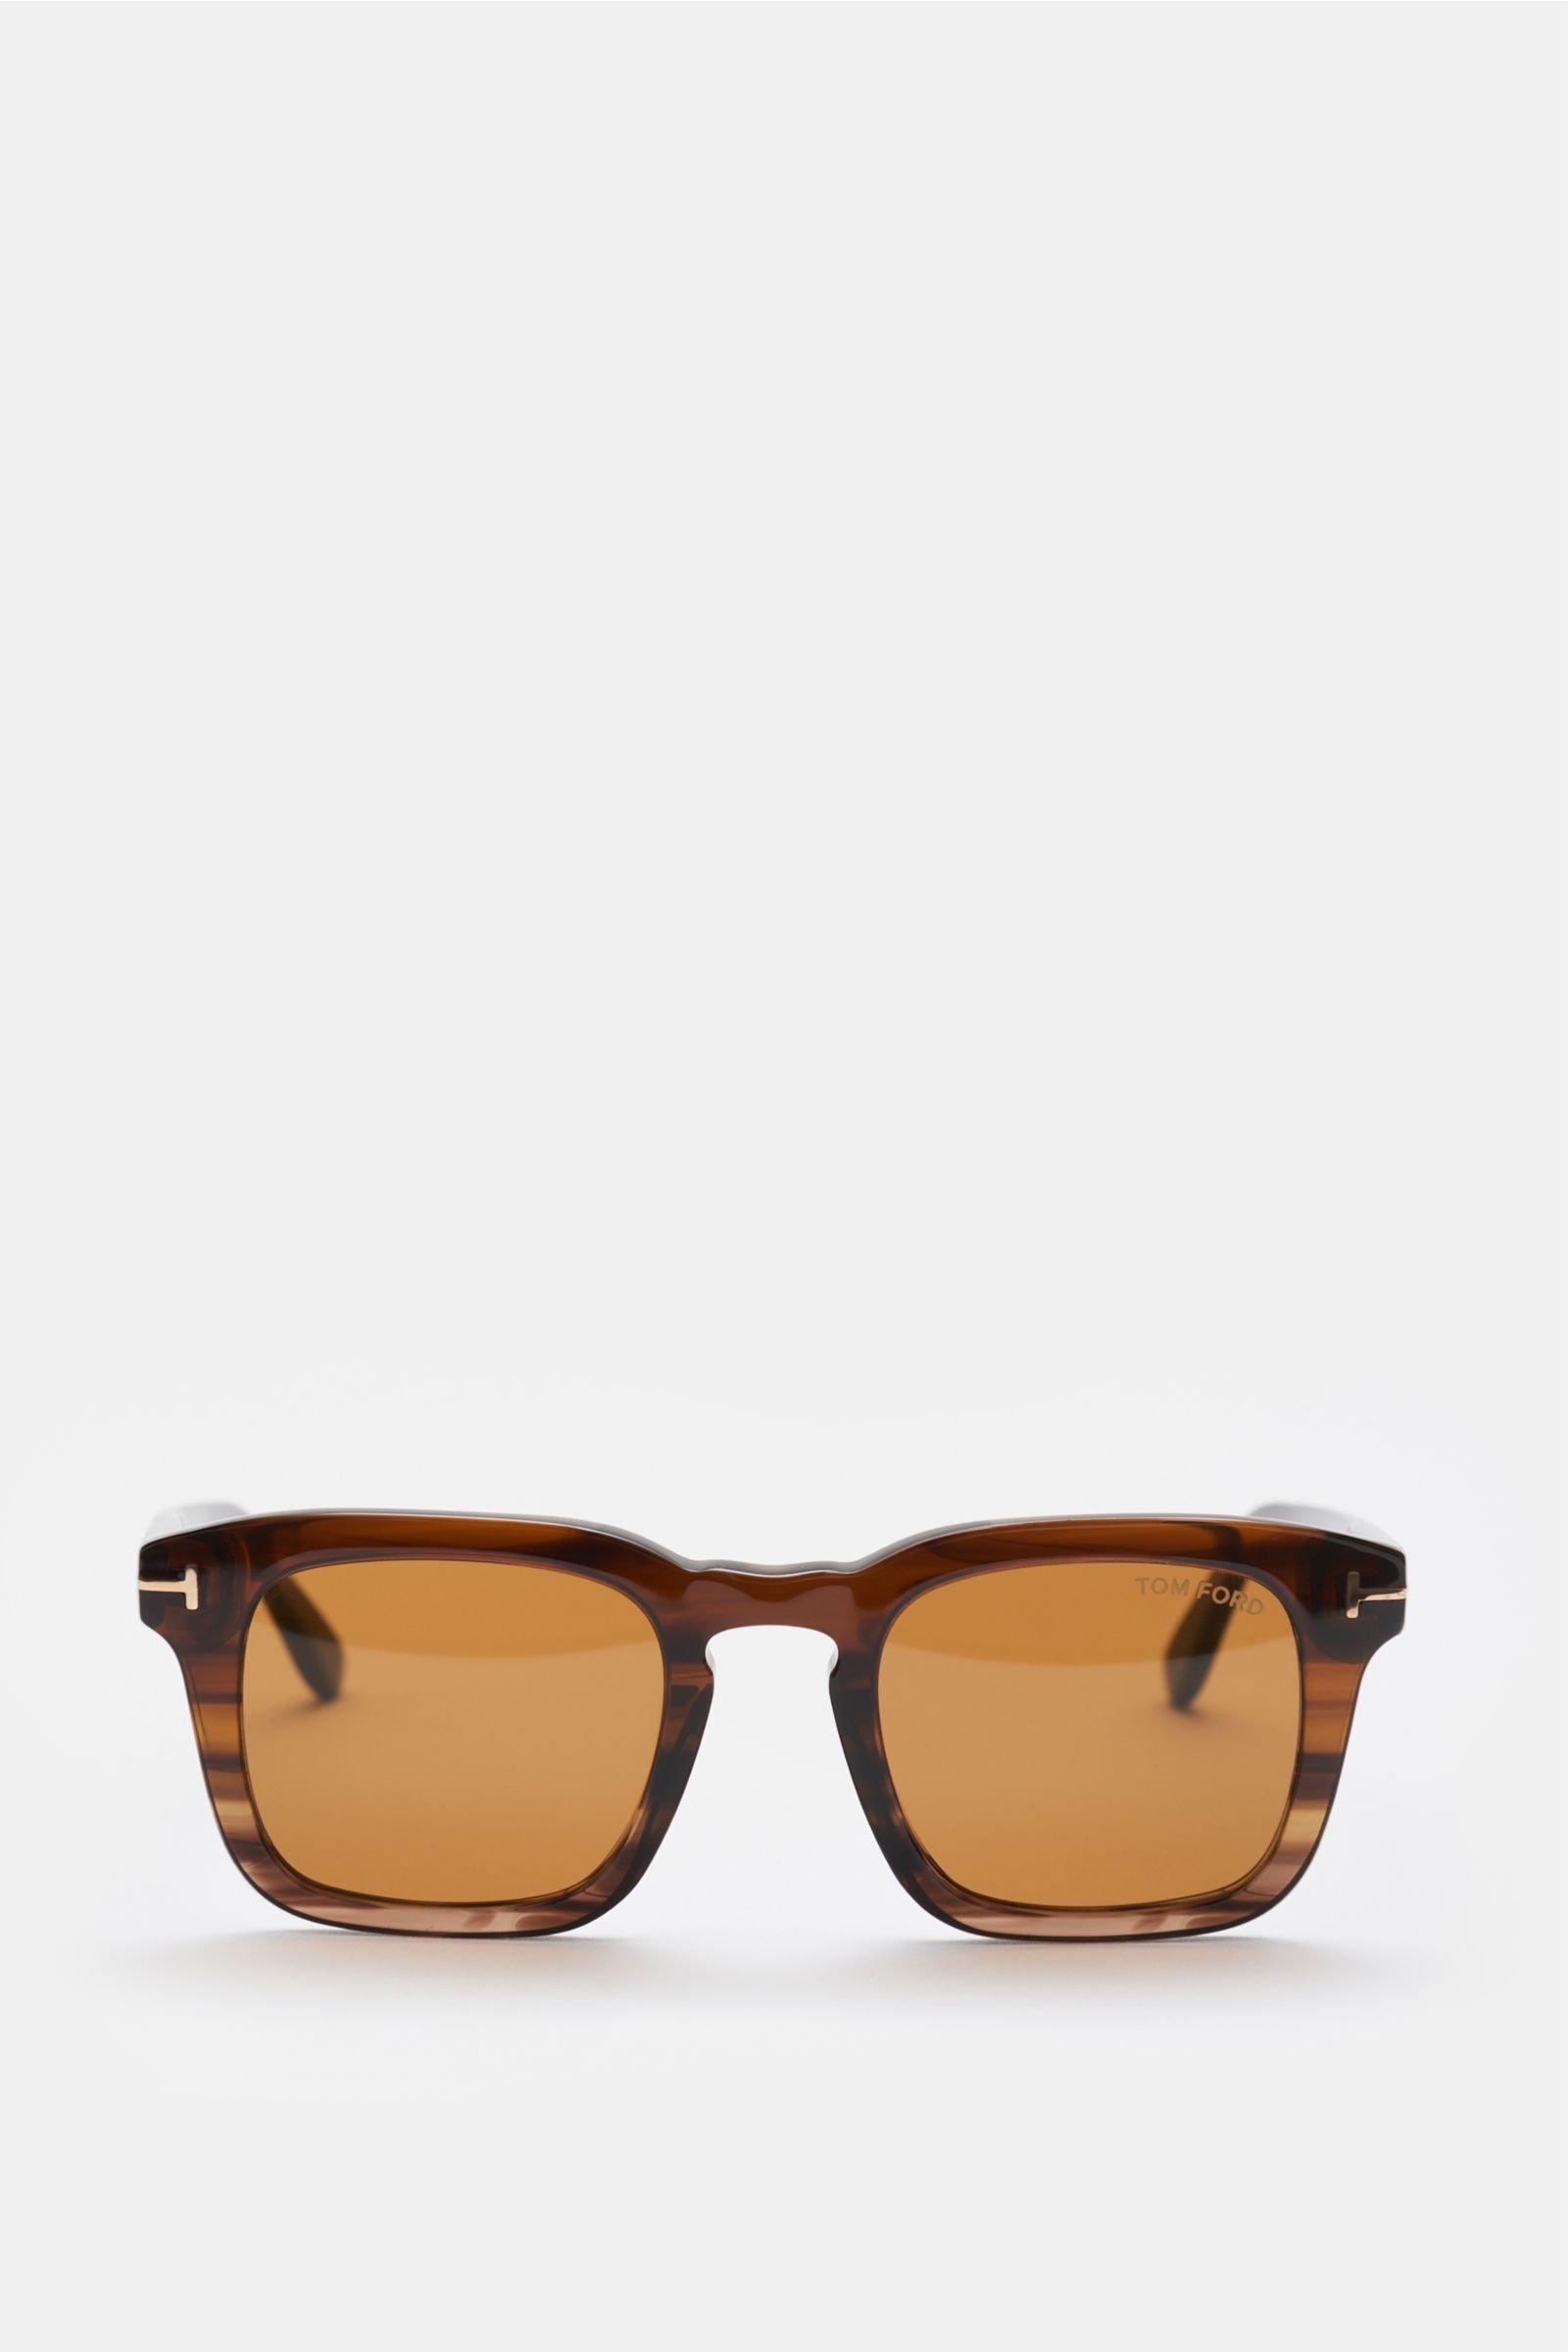 Sunglasses 'Dax' brown/yellow